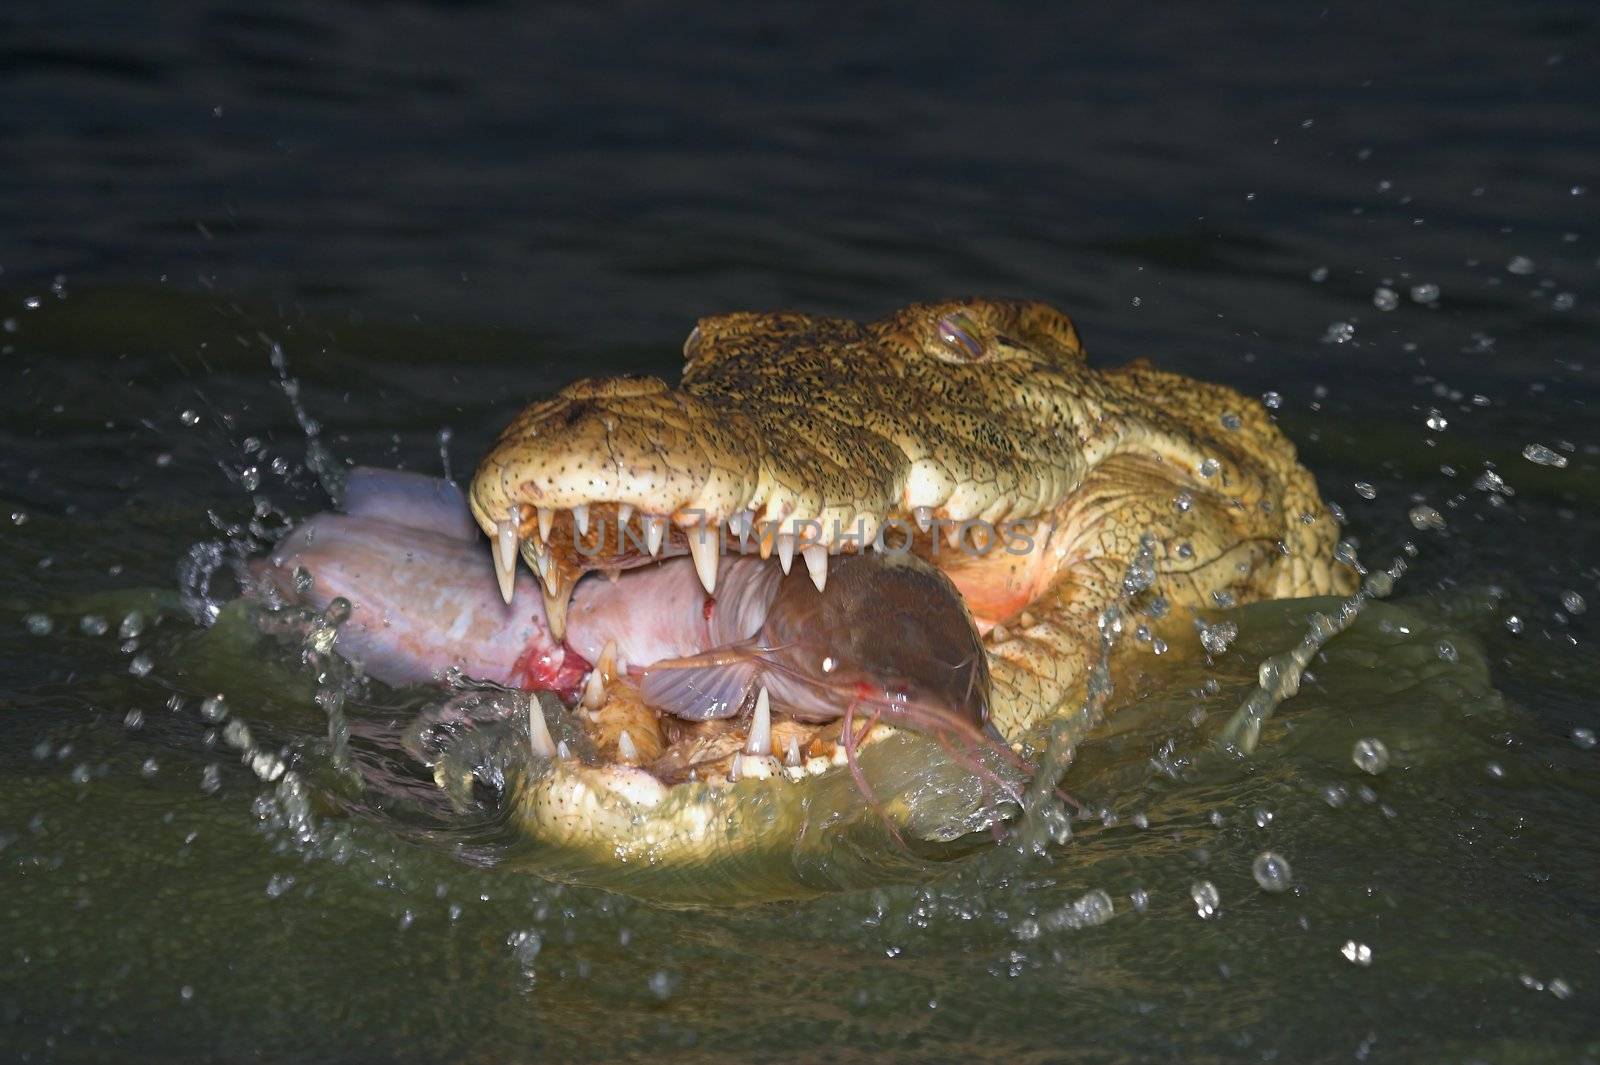 Crocodile Catching a fish in a splash